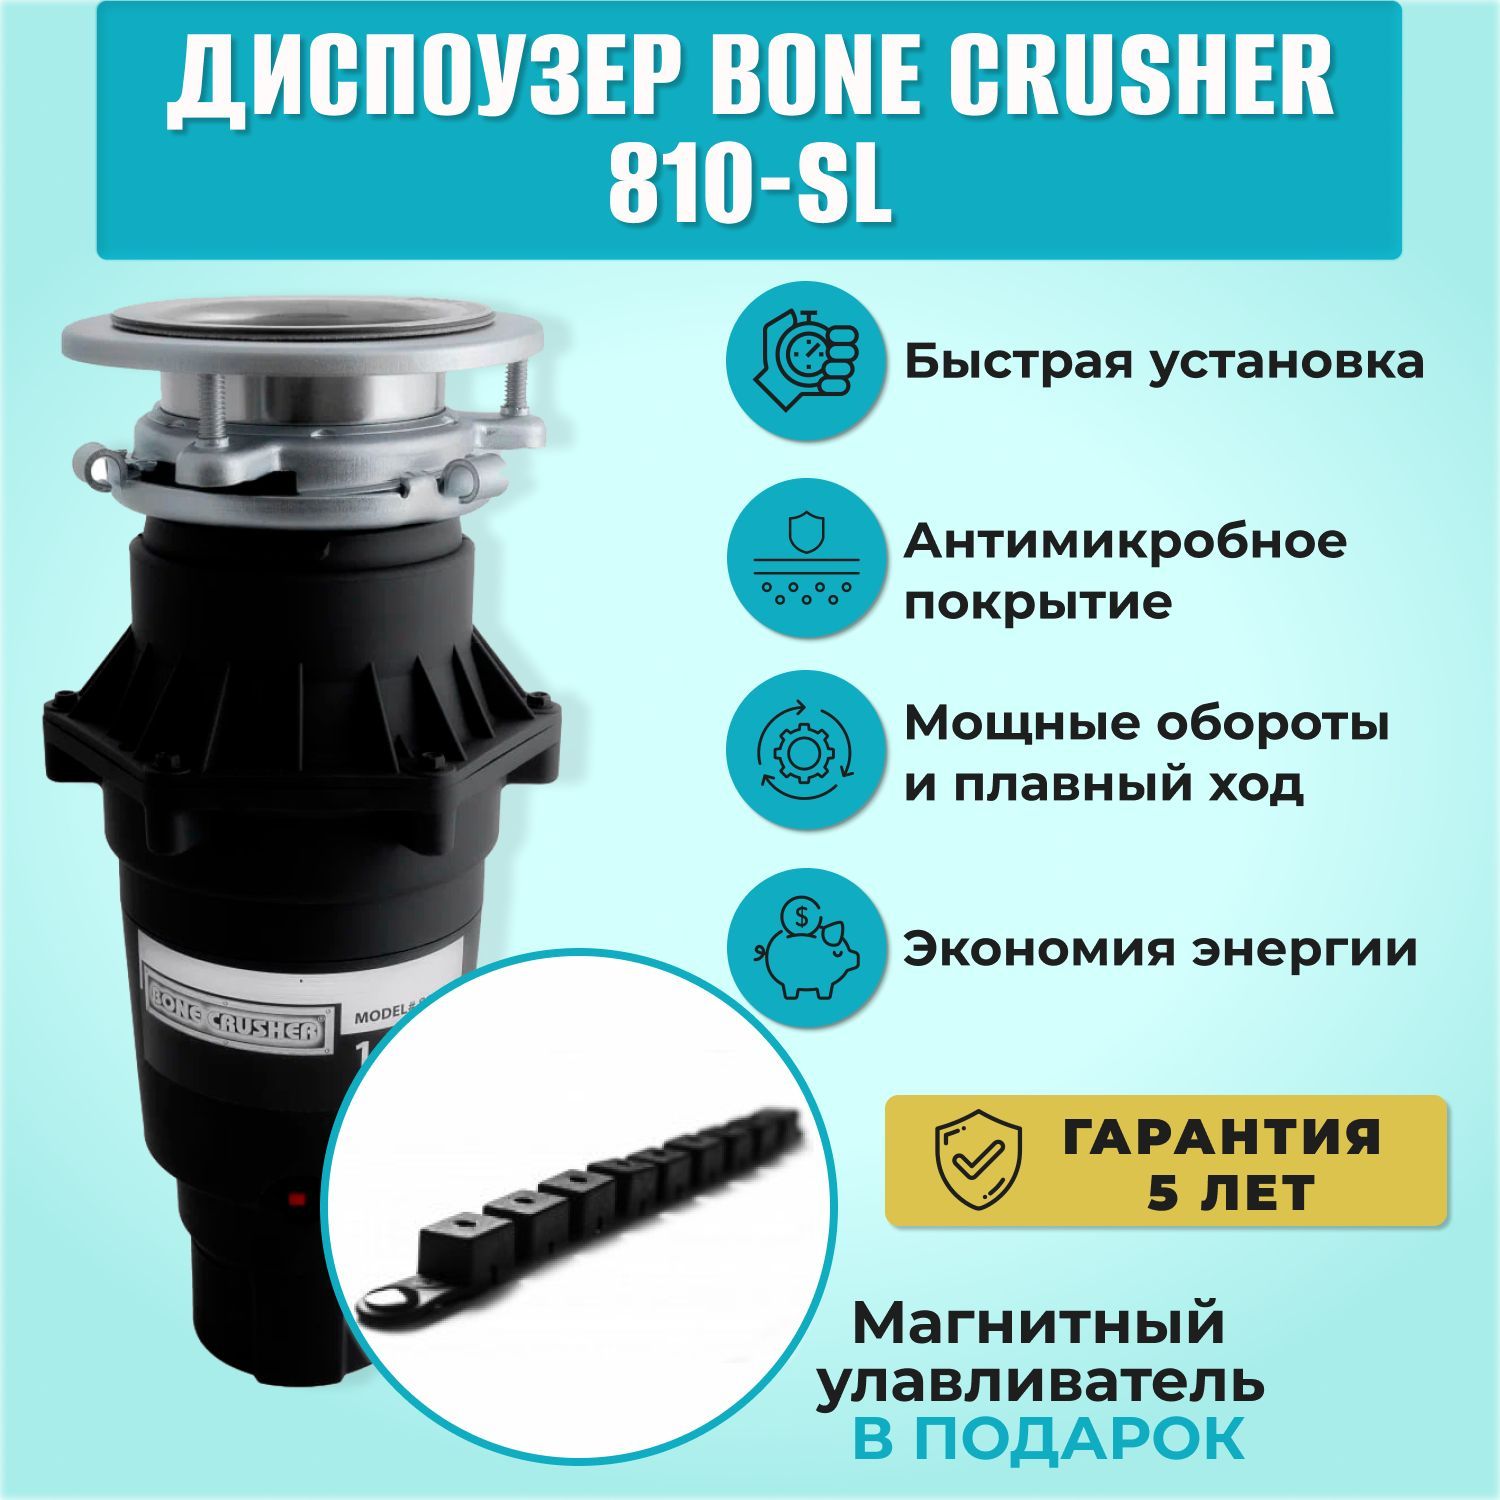 Bone crusher 810 slim